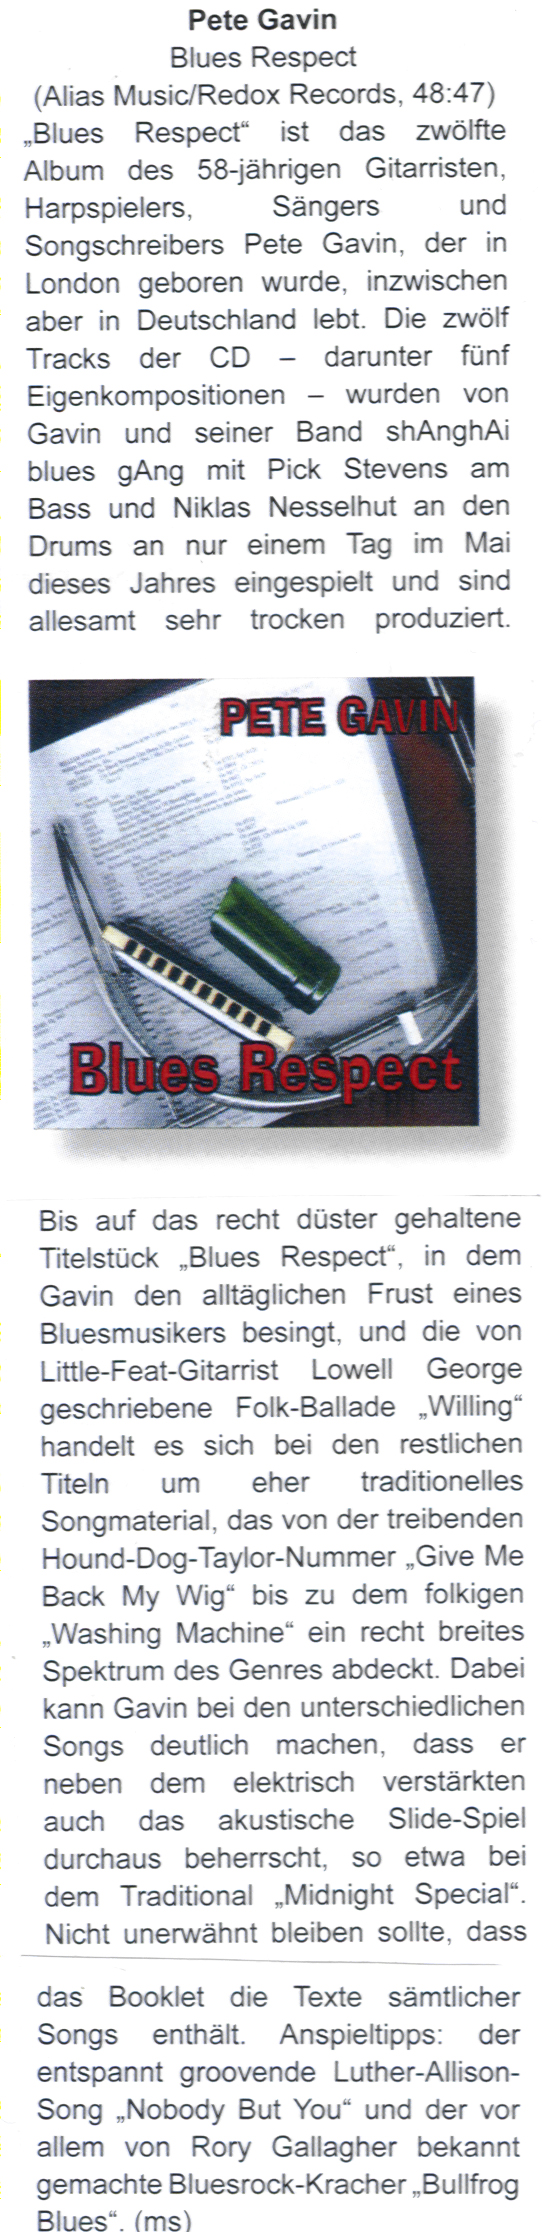 BluesNews55